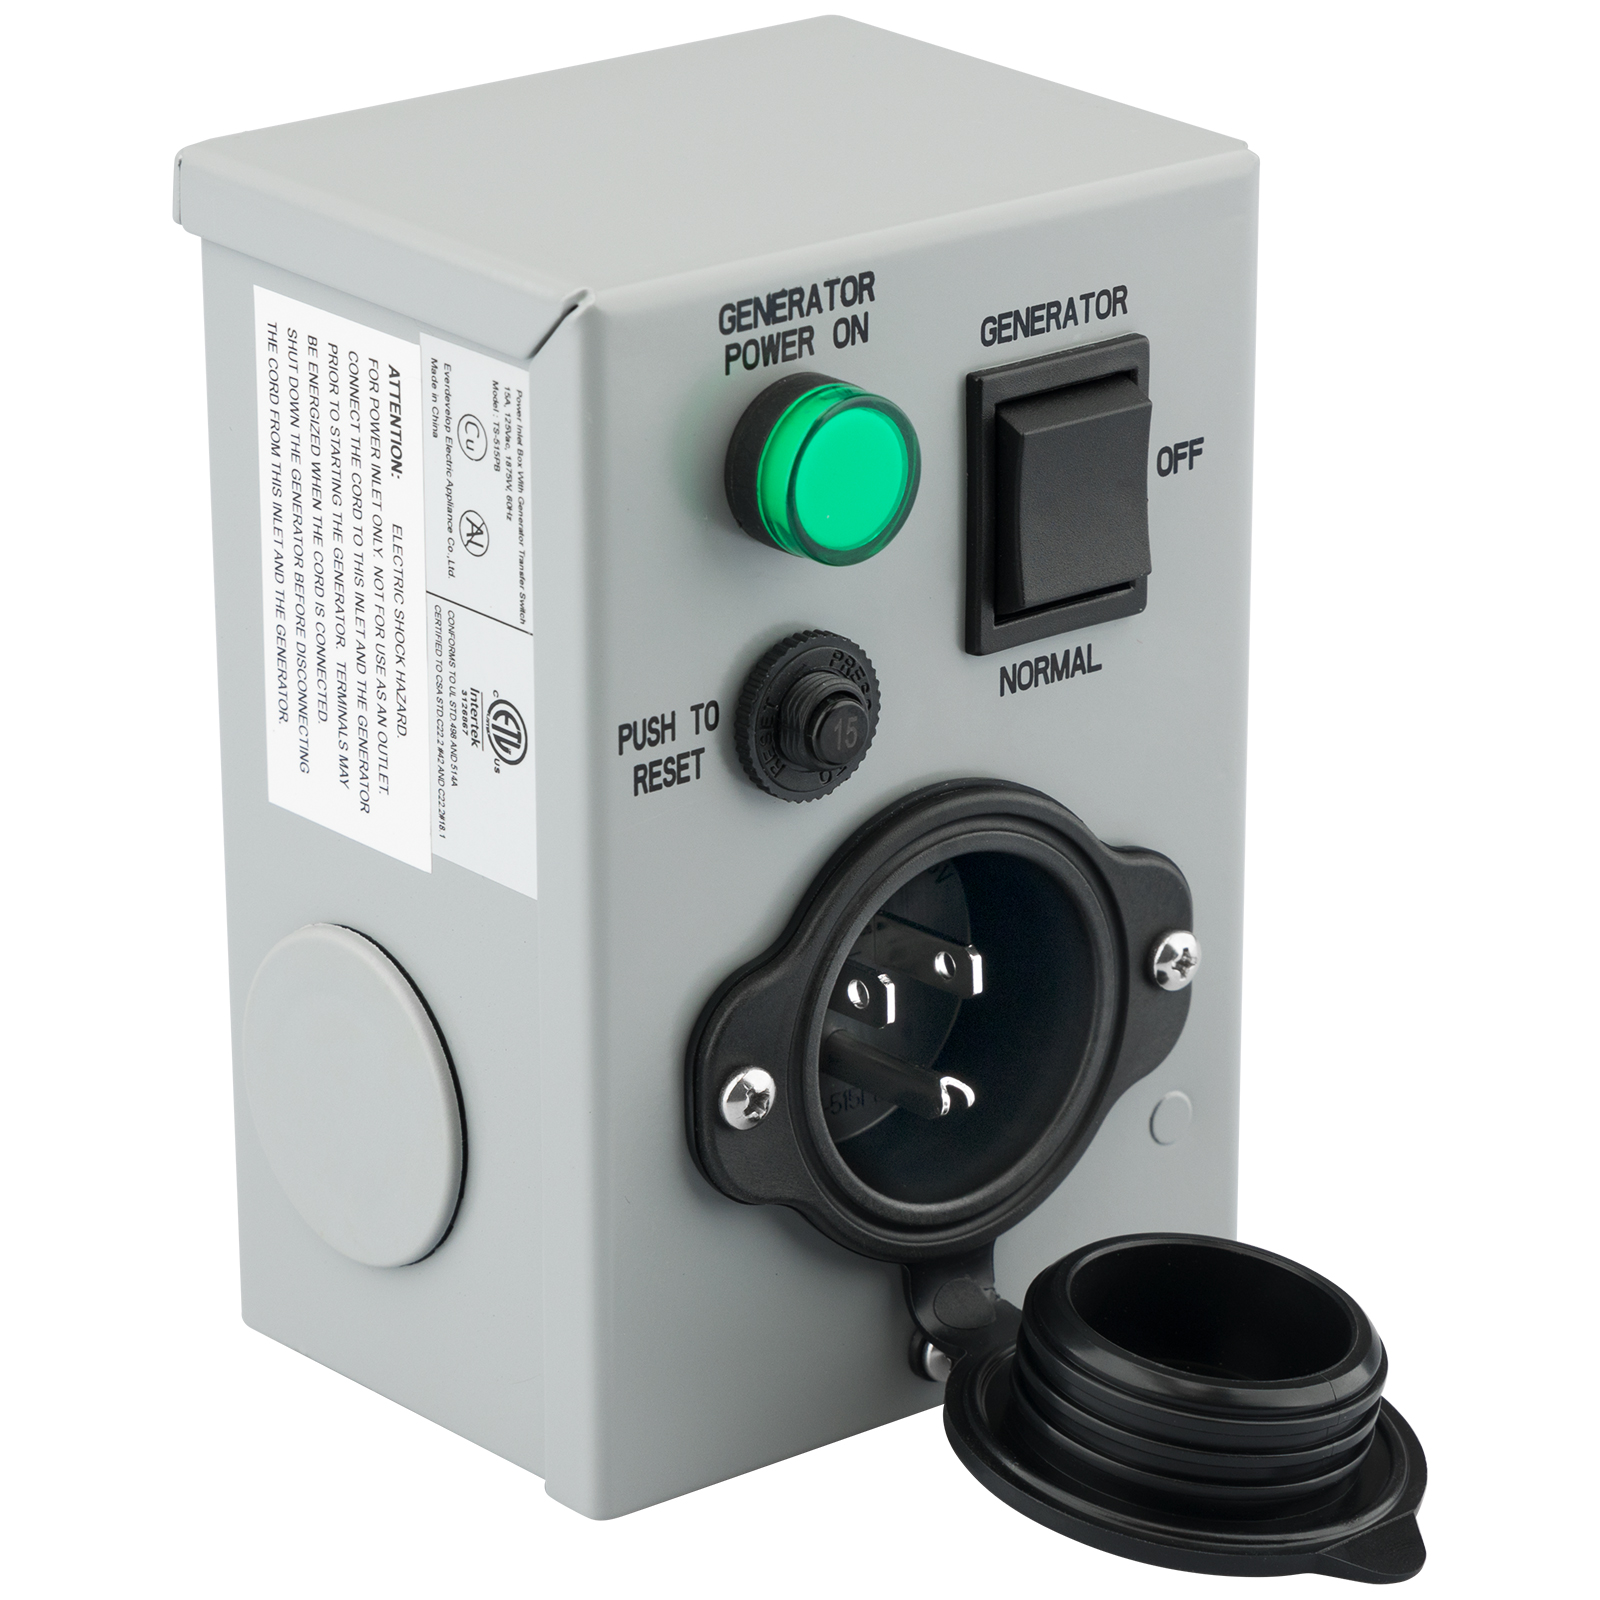 NEMA 5-15P Generator Transfer Switch,15A,125V